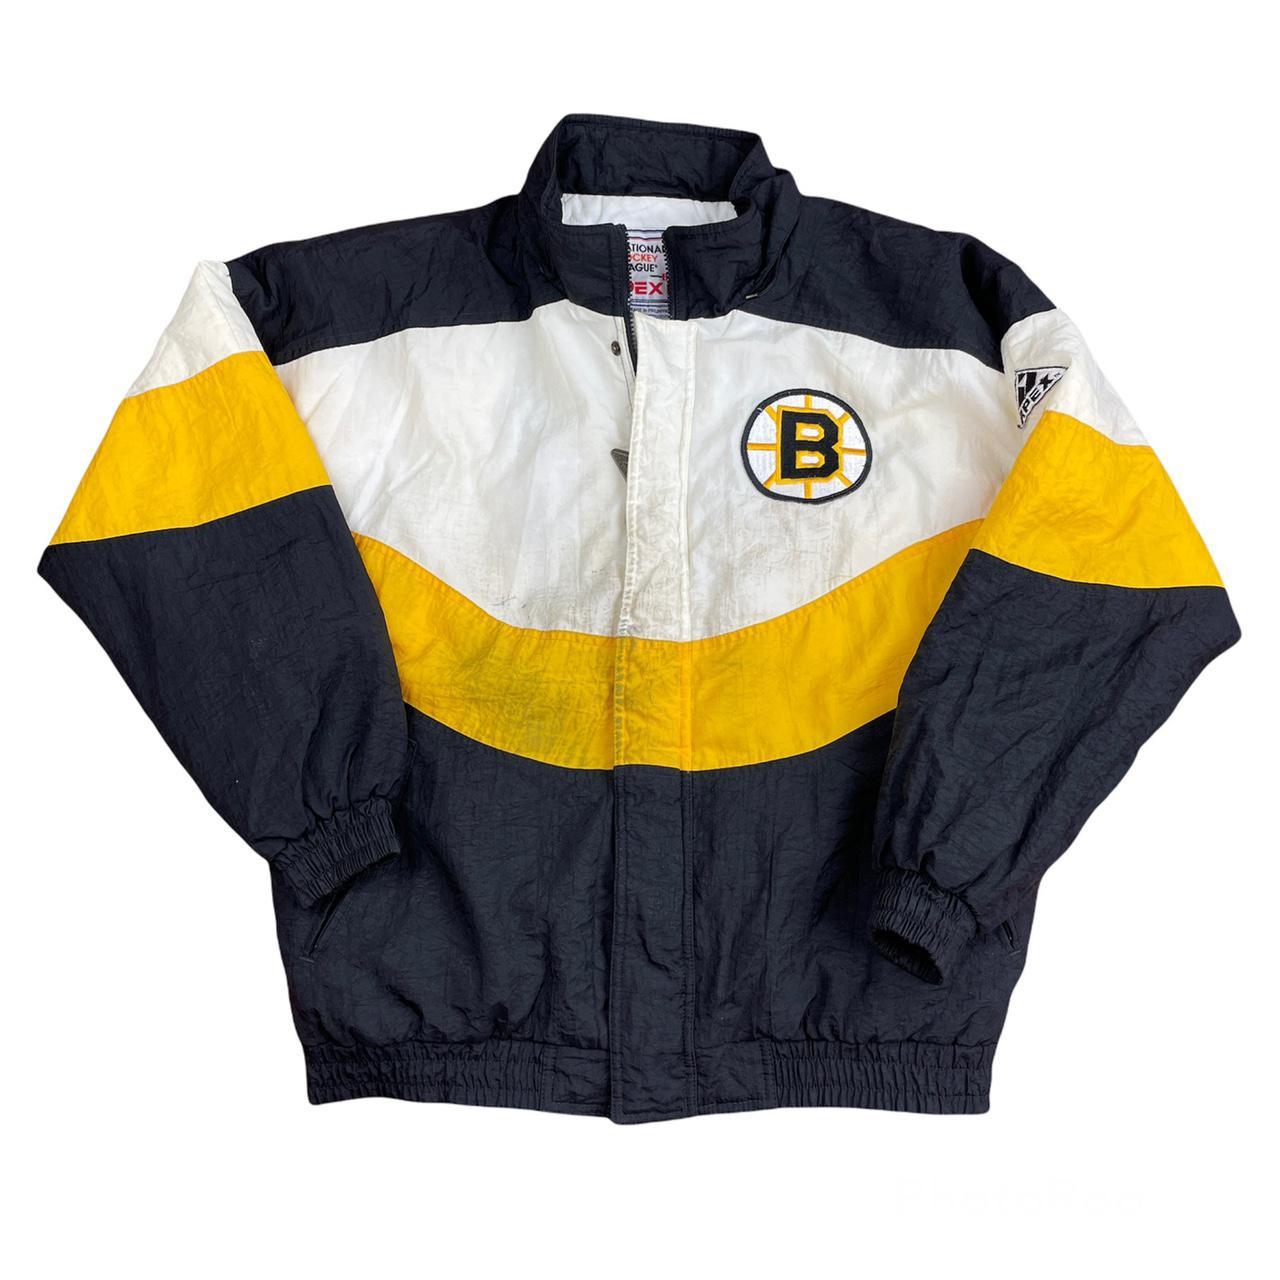 Product Image 2 - Boston bruins vintage winter jacket